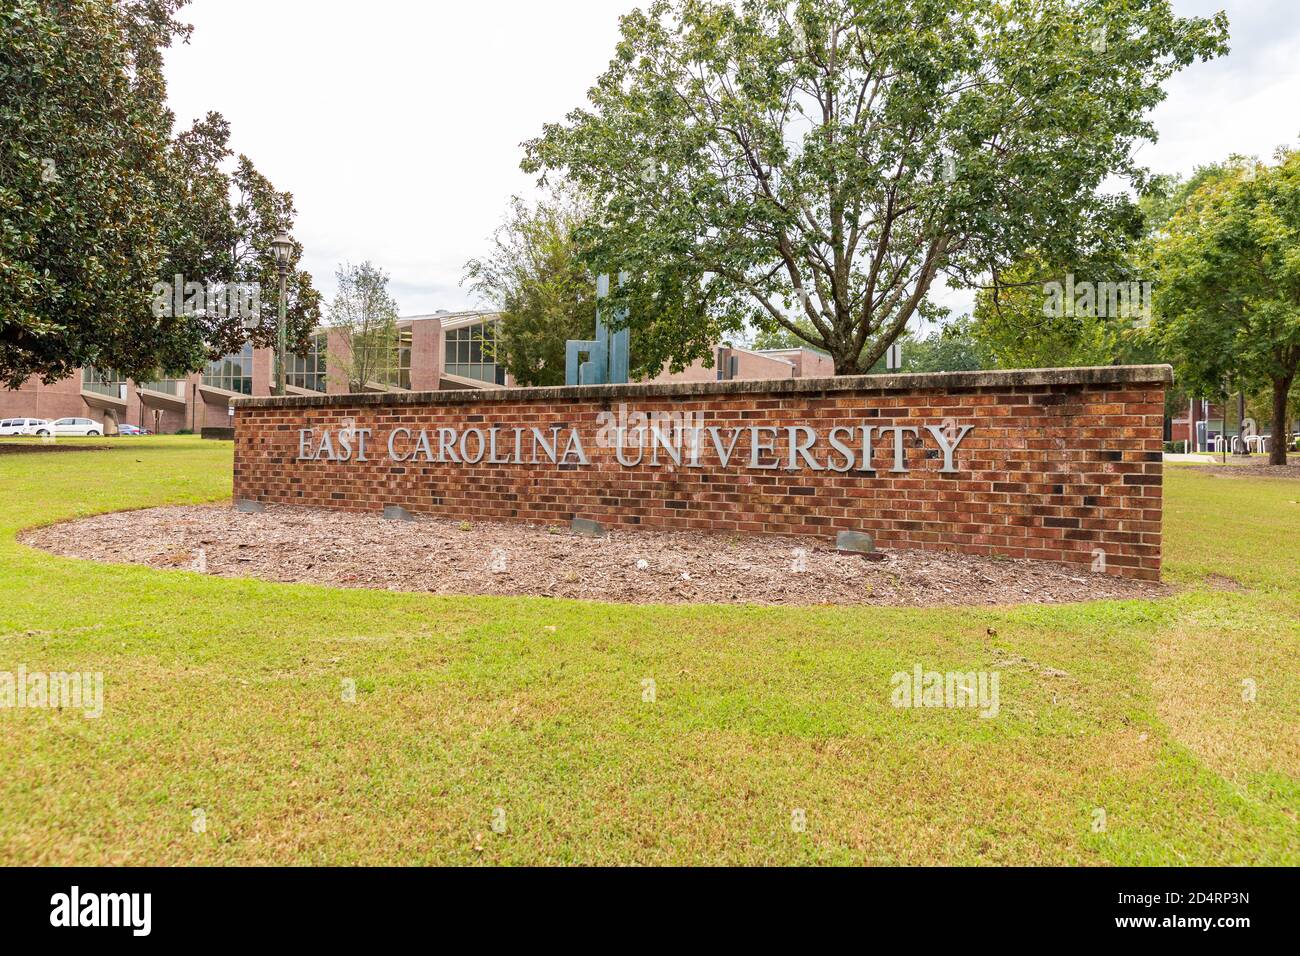 Greenville, NC / USA - September 24, 2020: East Carolina University sign  Stock Photo - Alamy